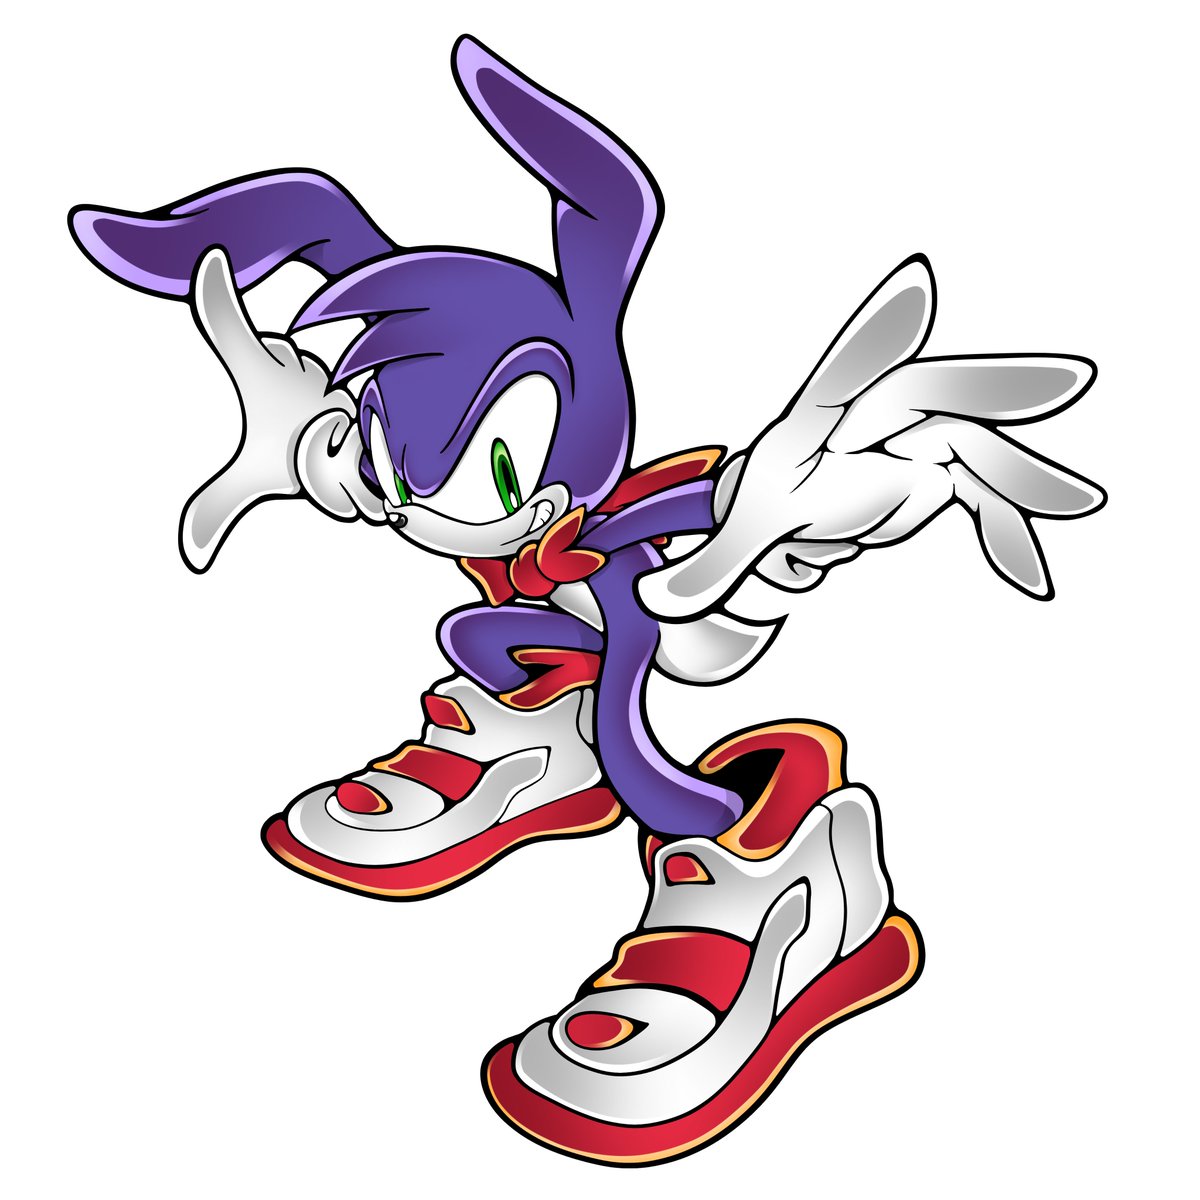 Sonic rabbit. Кроссовки Соника из Соник адвенчер 2. Кролик Фил Соник. Feel the Rabbit Sonic. Соник в стиле адвенчер.